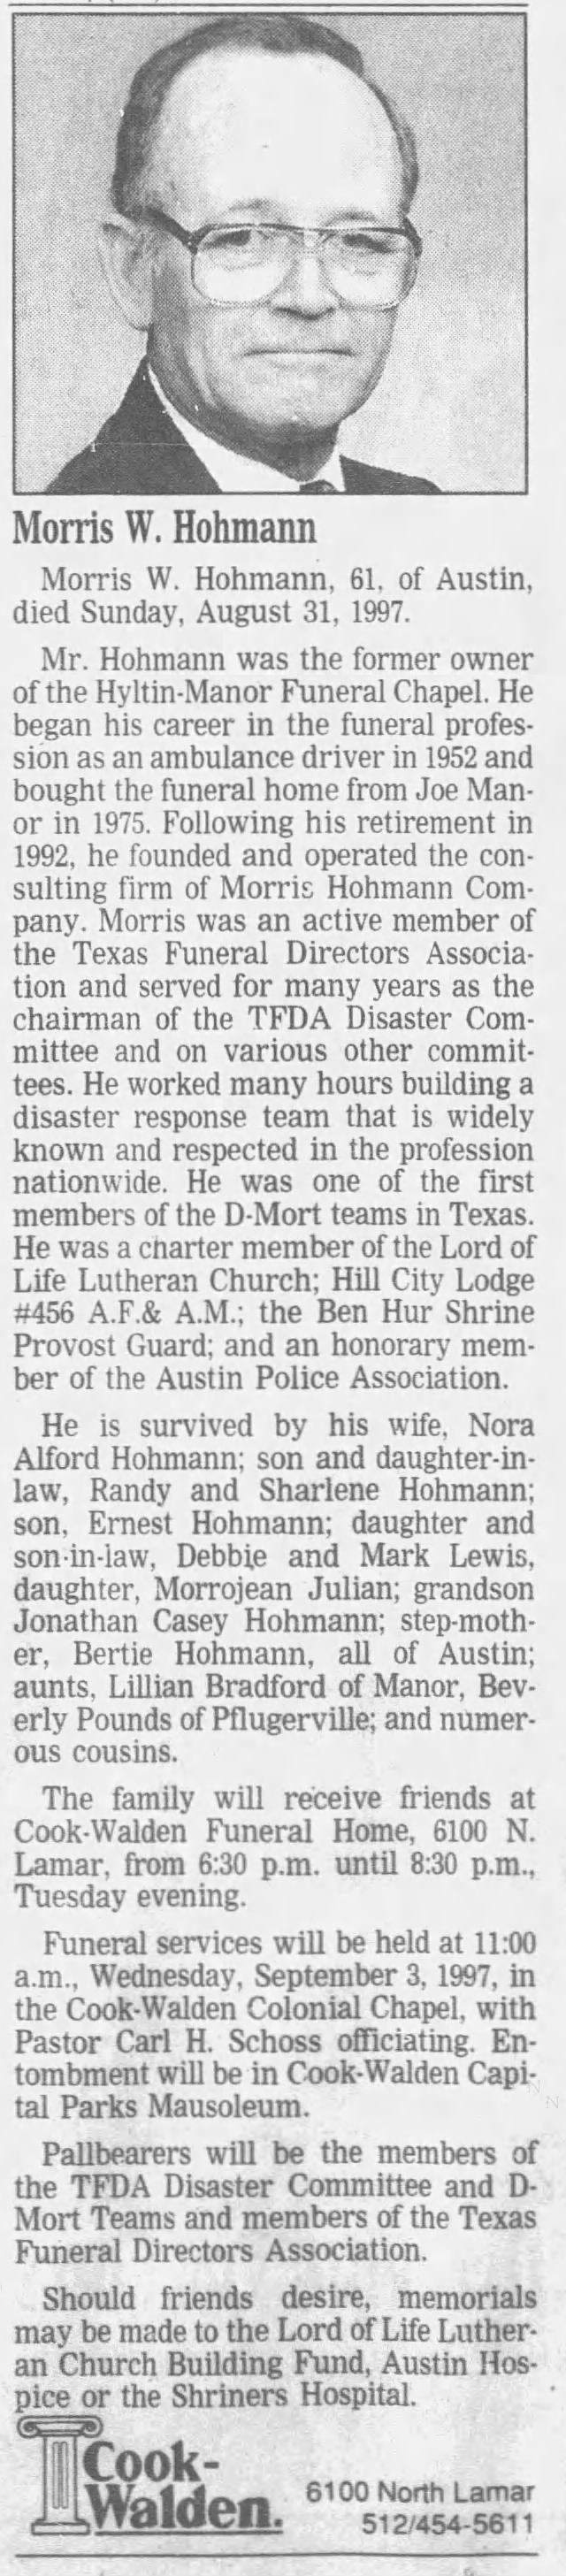 Morris Hohmann Obituary Austin American-Statesman Monday September 1, 1997 Page 36